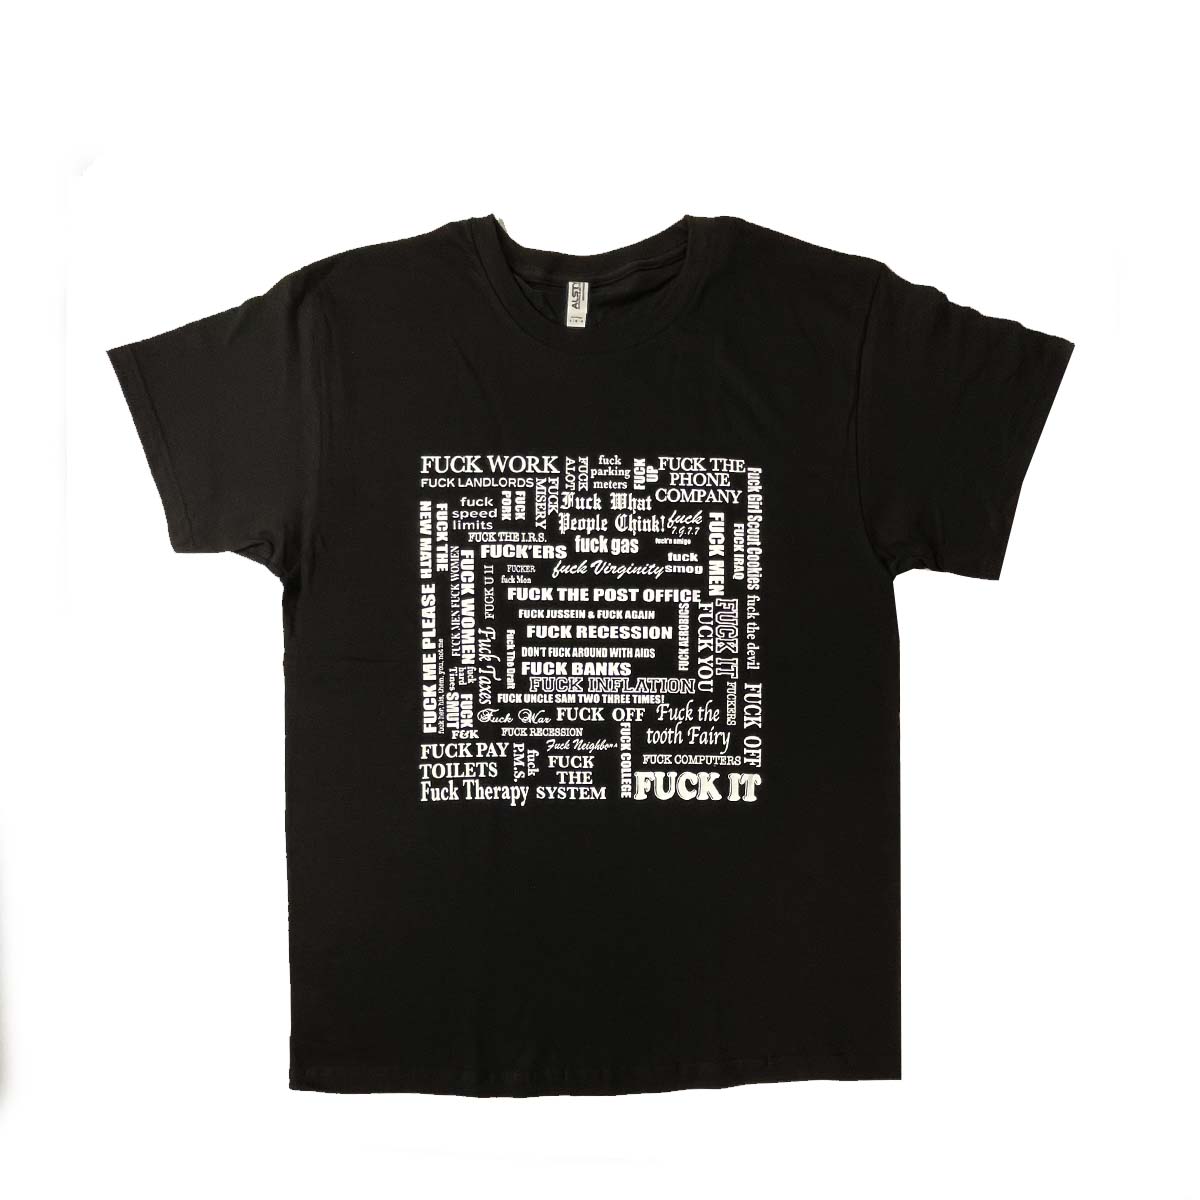 Camiseta Fucking Shirt 100% Algodón, Pack de 5 Unidades, S, M, L, XL, XXL